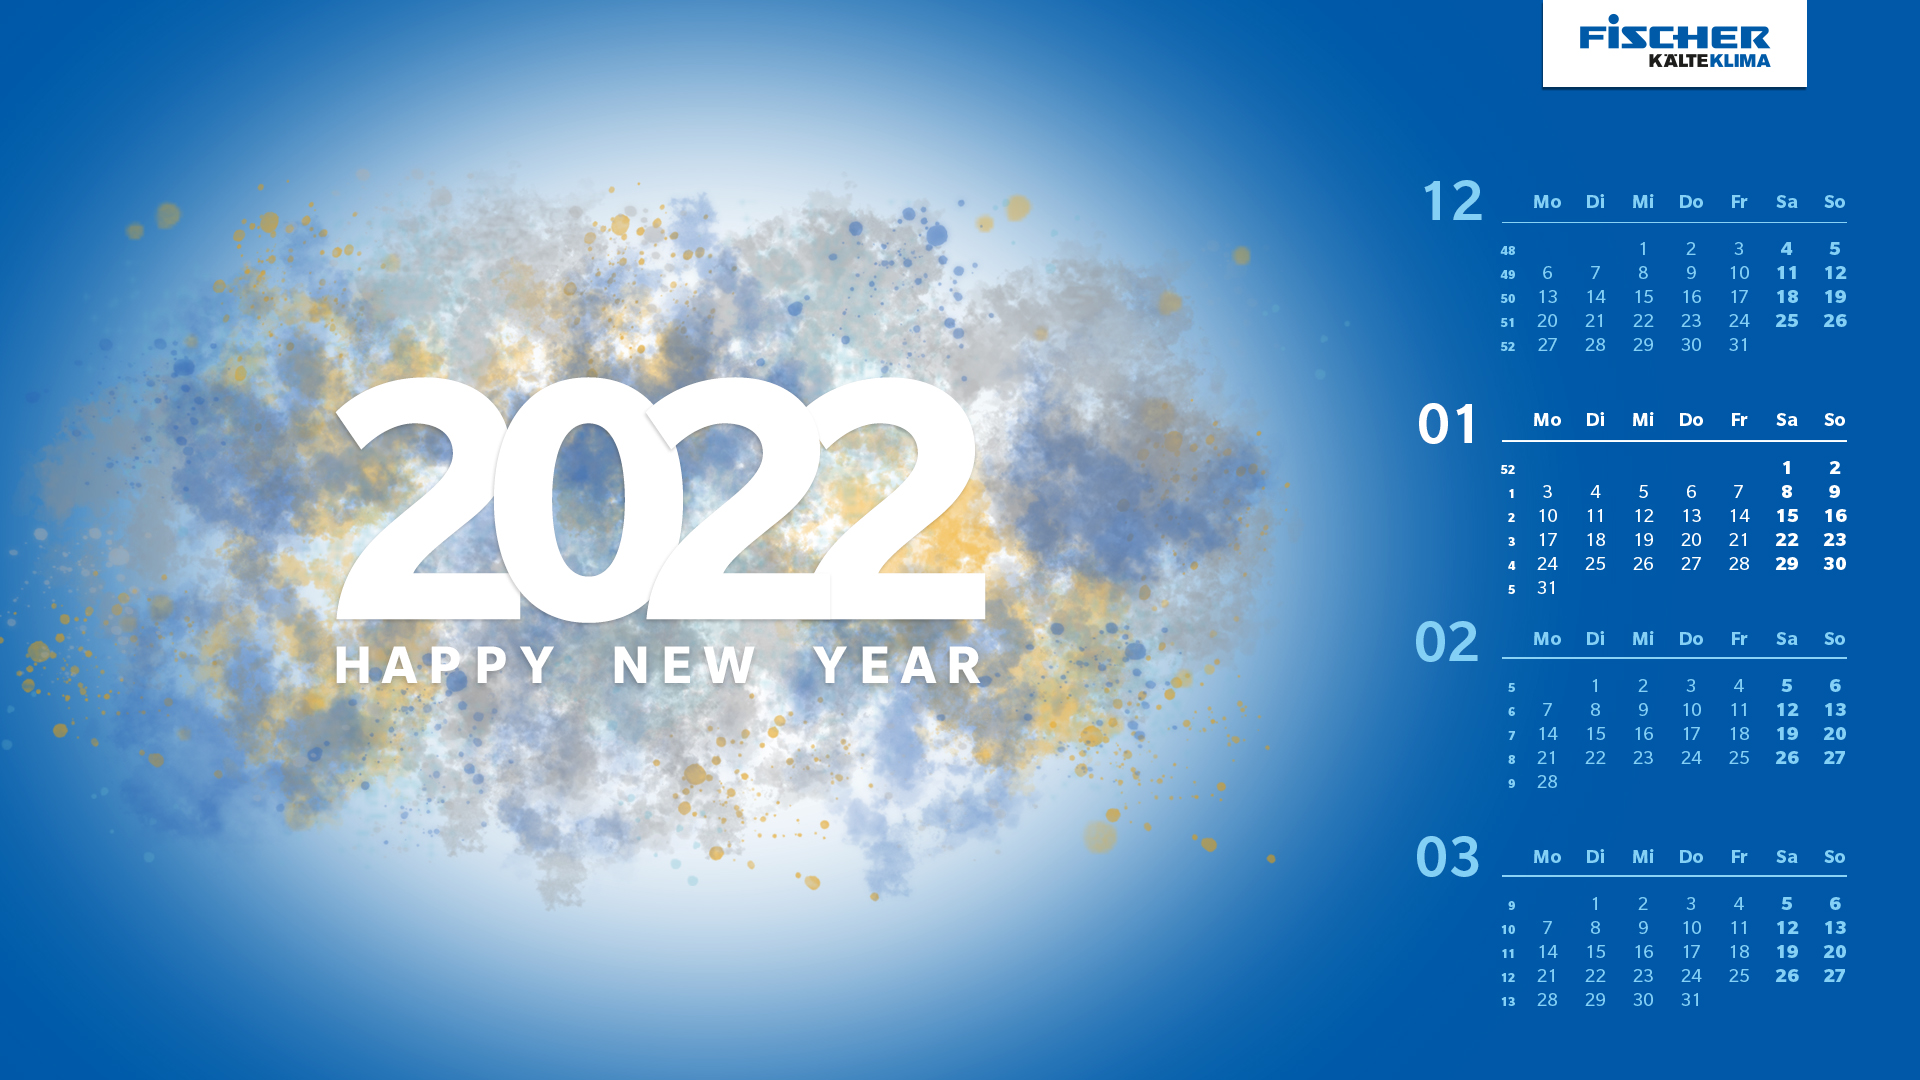 Fischer-Desktop-Kalender // 12 2021-03 2022